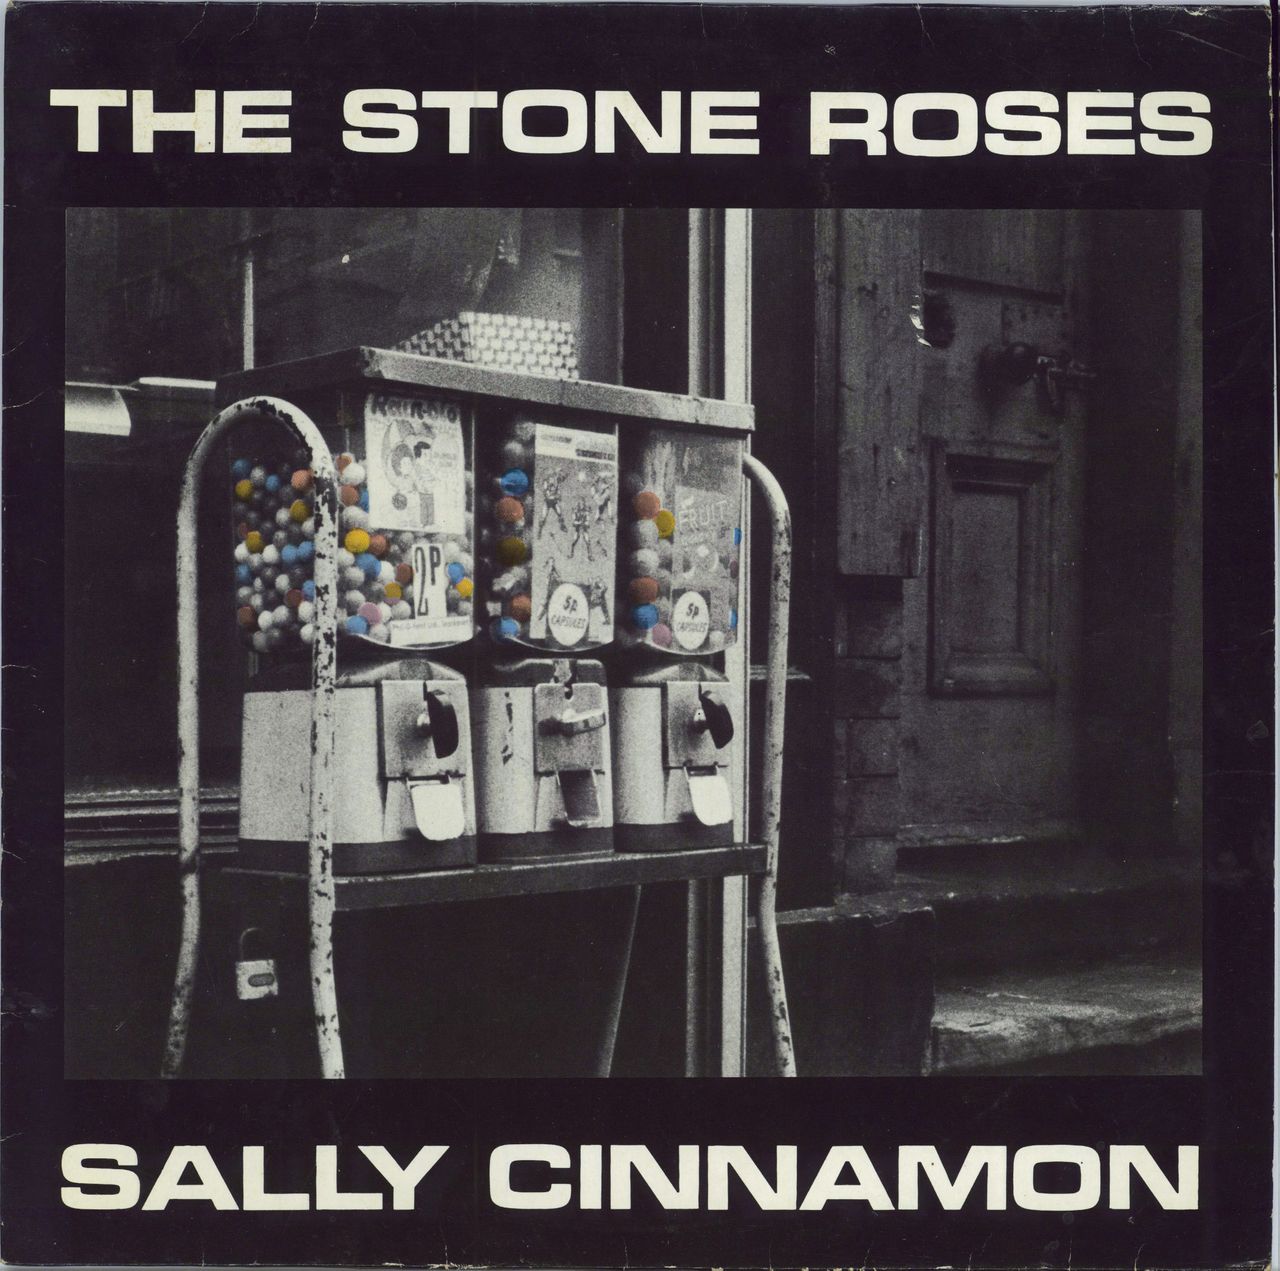 The Stone Roses Sally Cinnamon - 2nd - VG UK 12" vinyl single (12 inch record / Maxi-single) 12REV36